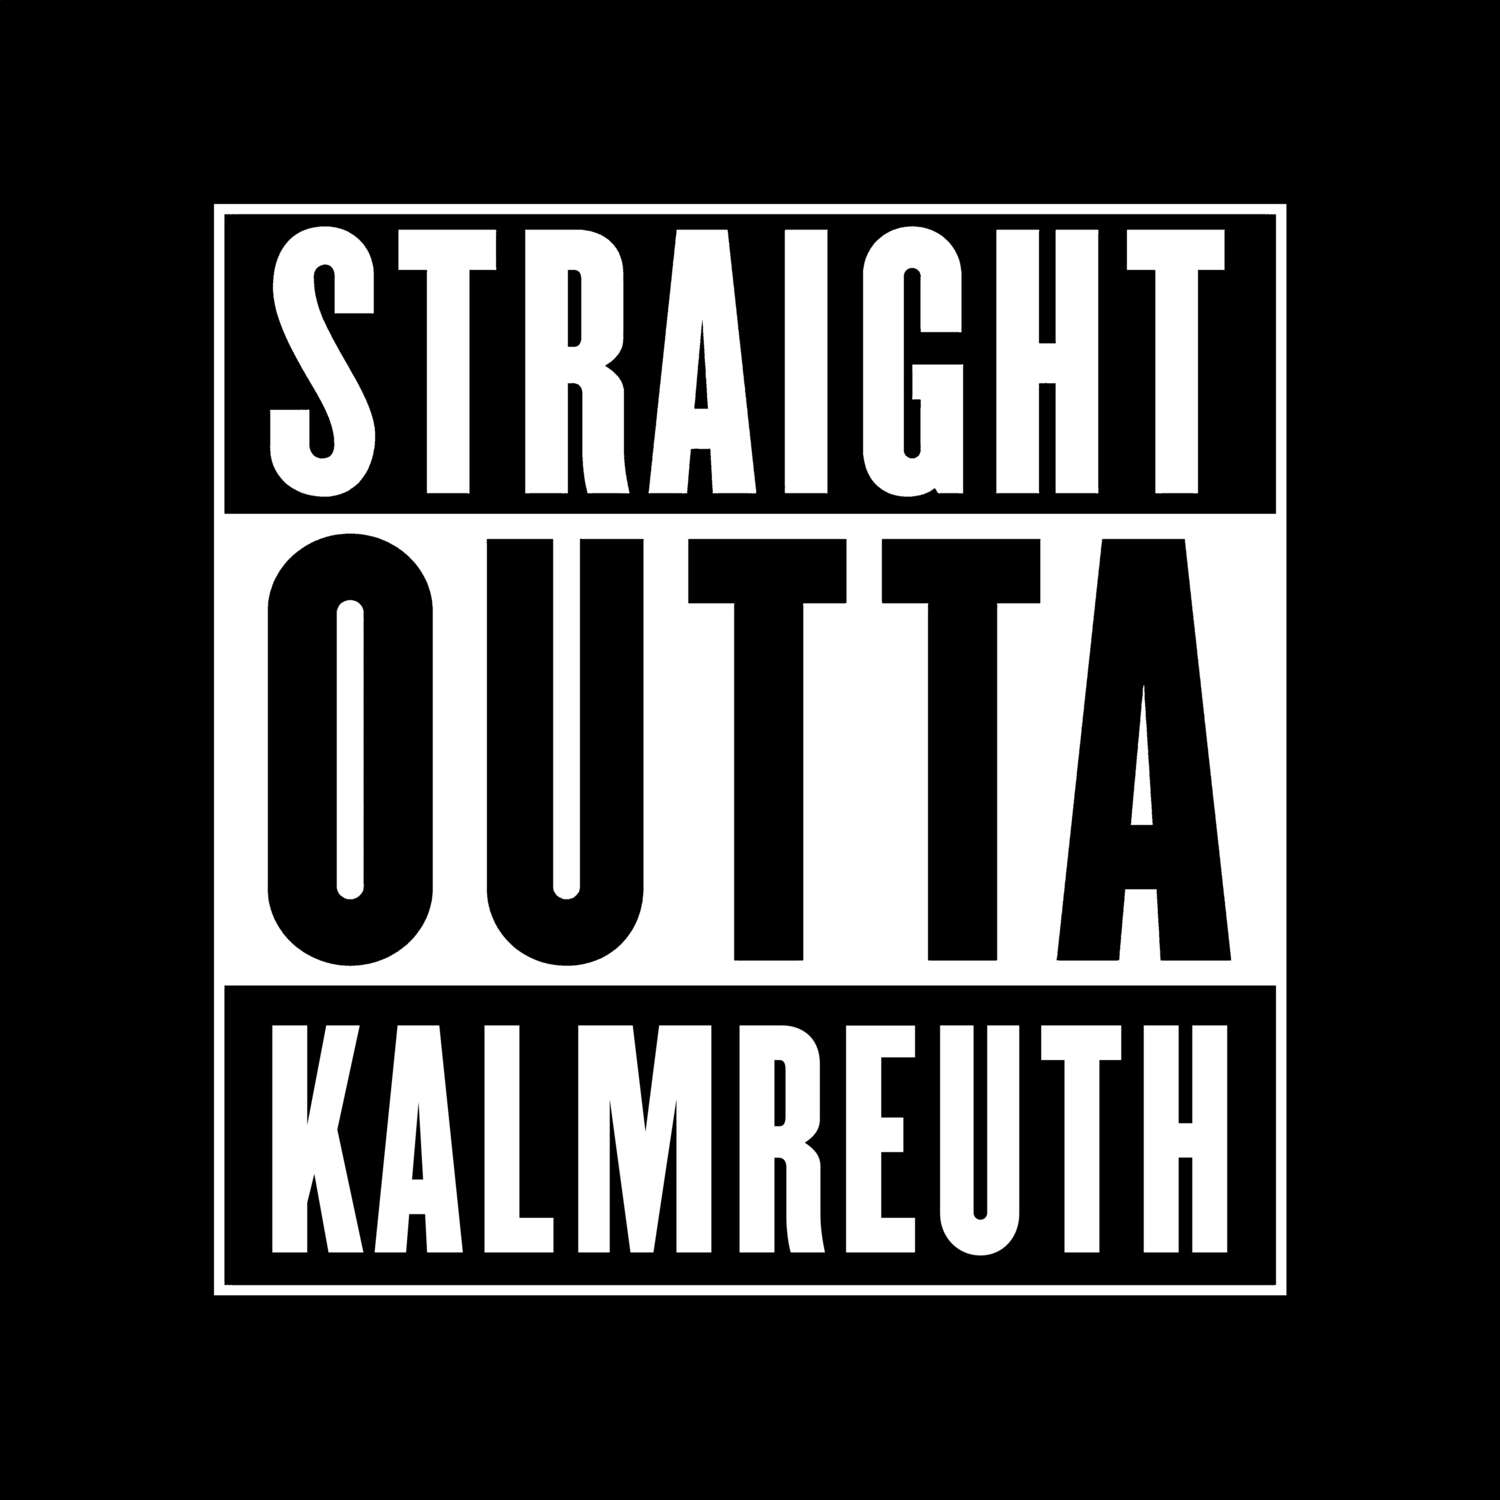 Kalmreuth T-Shirt »Straight Outta«